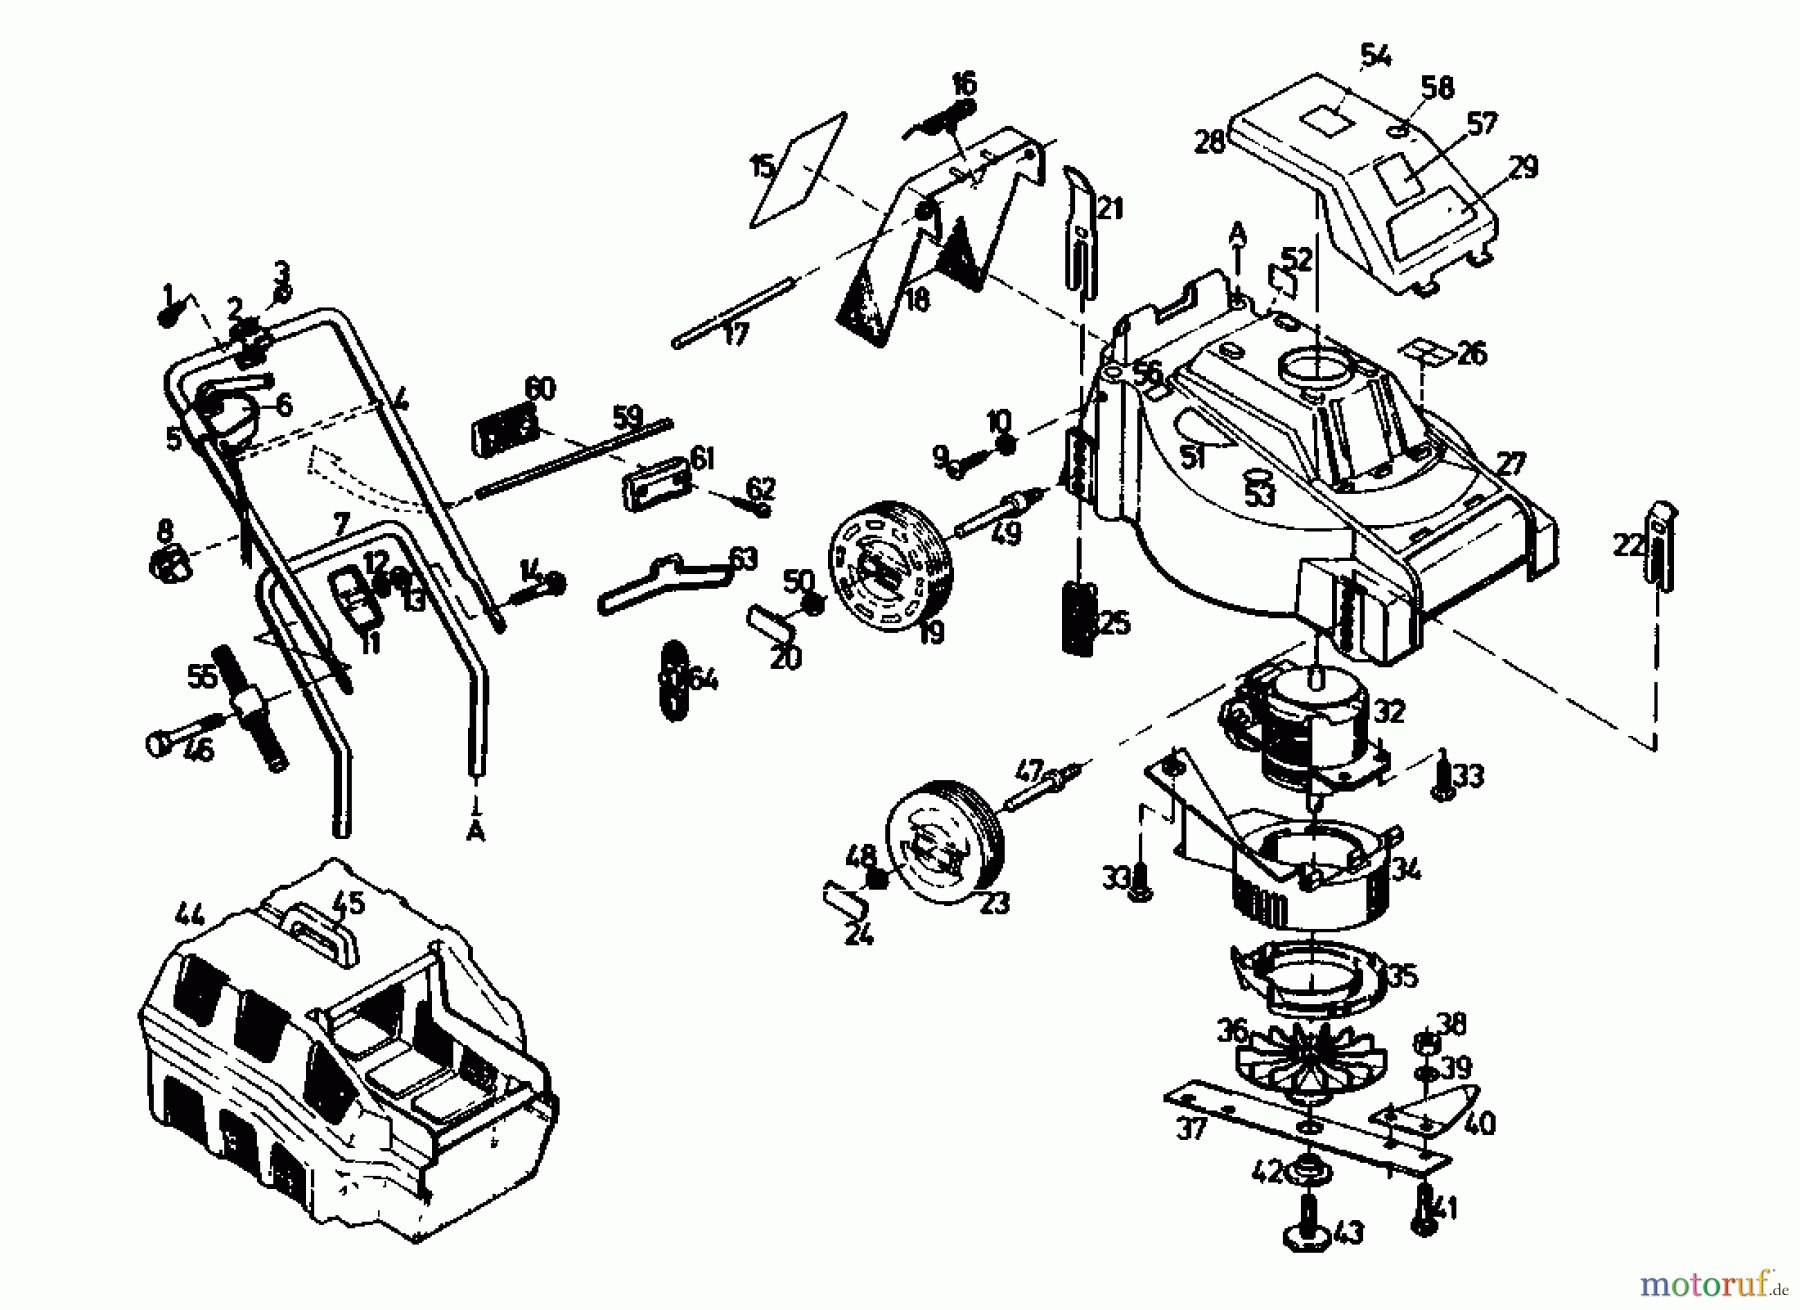  Gutbrod Electric mower HE 40 02889.04  (1990) Basic machine